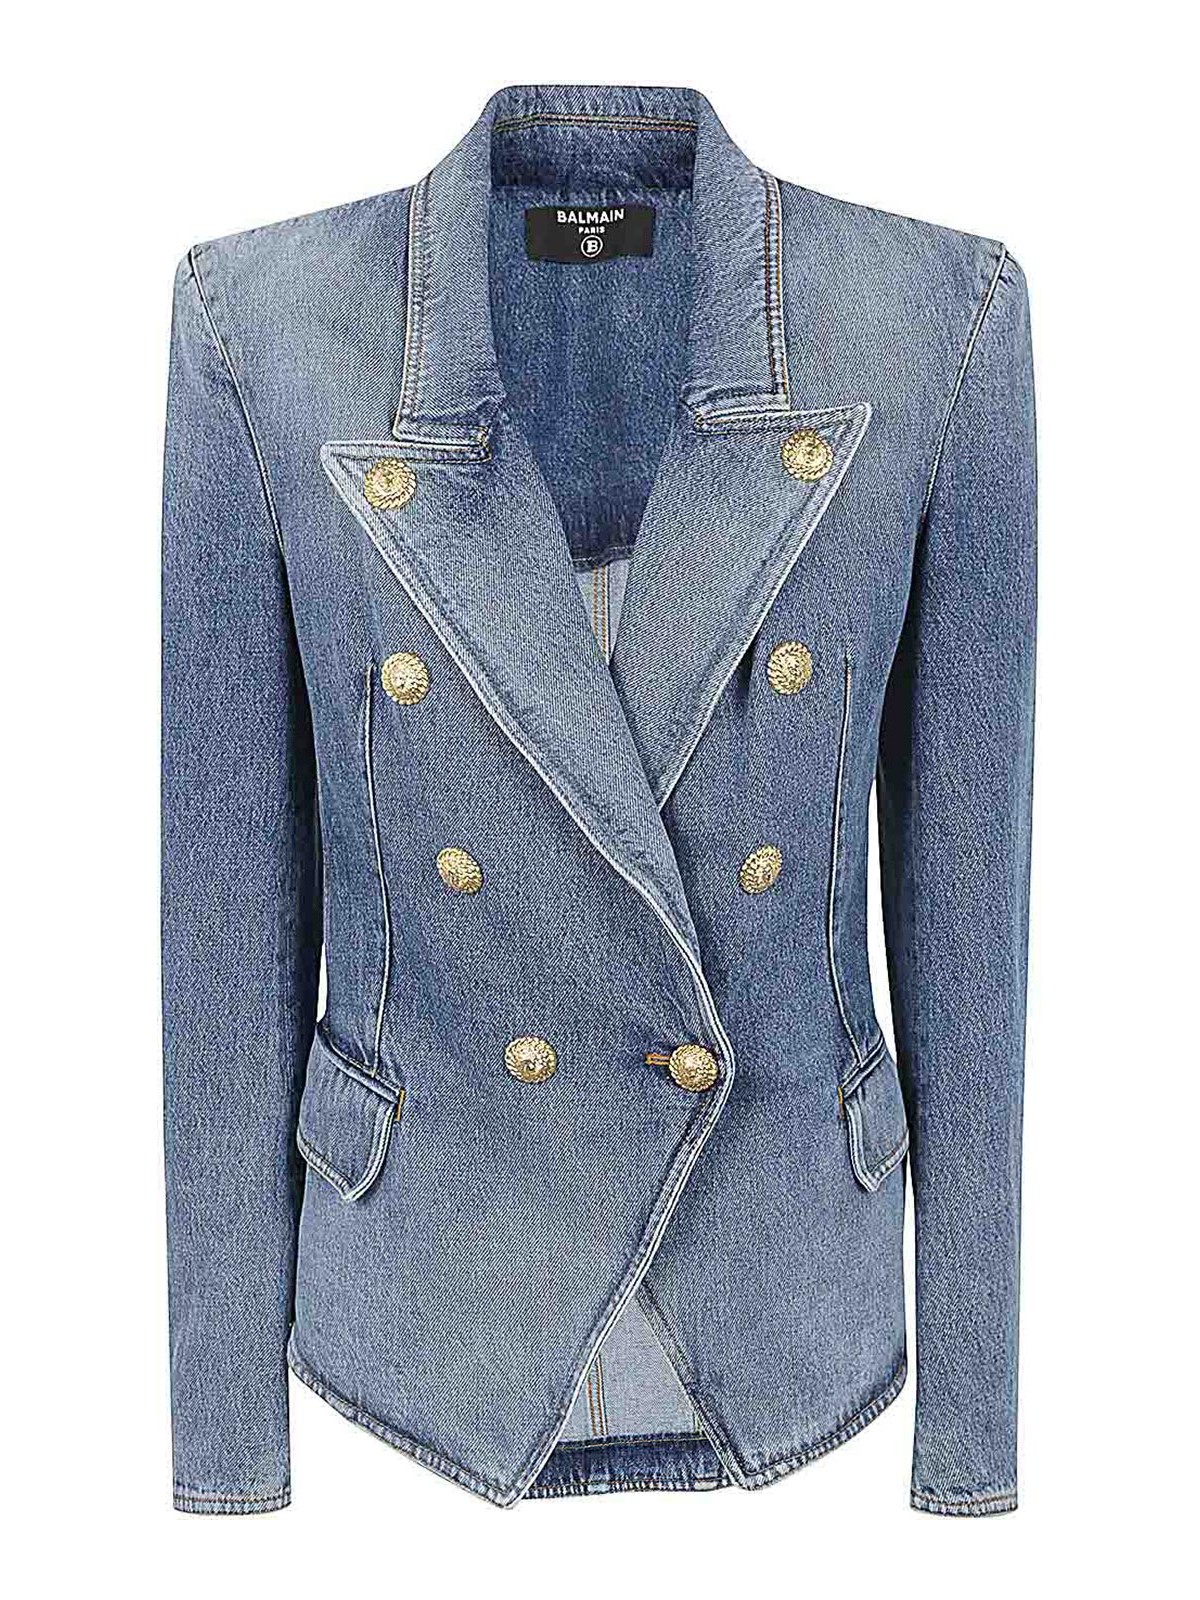 Shop Balmain 8 Btn Medium Blue Denim Jacket